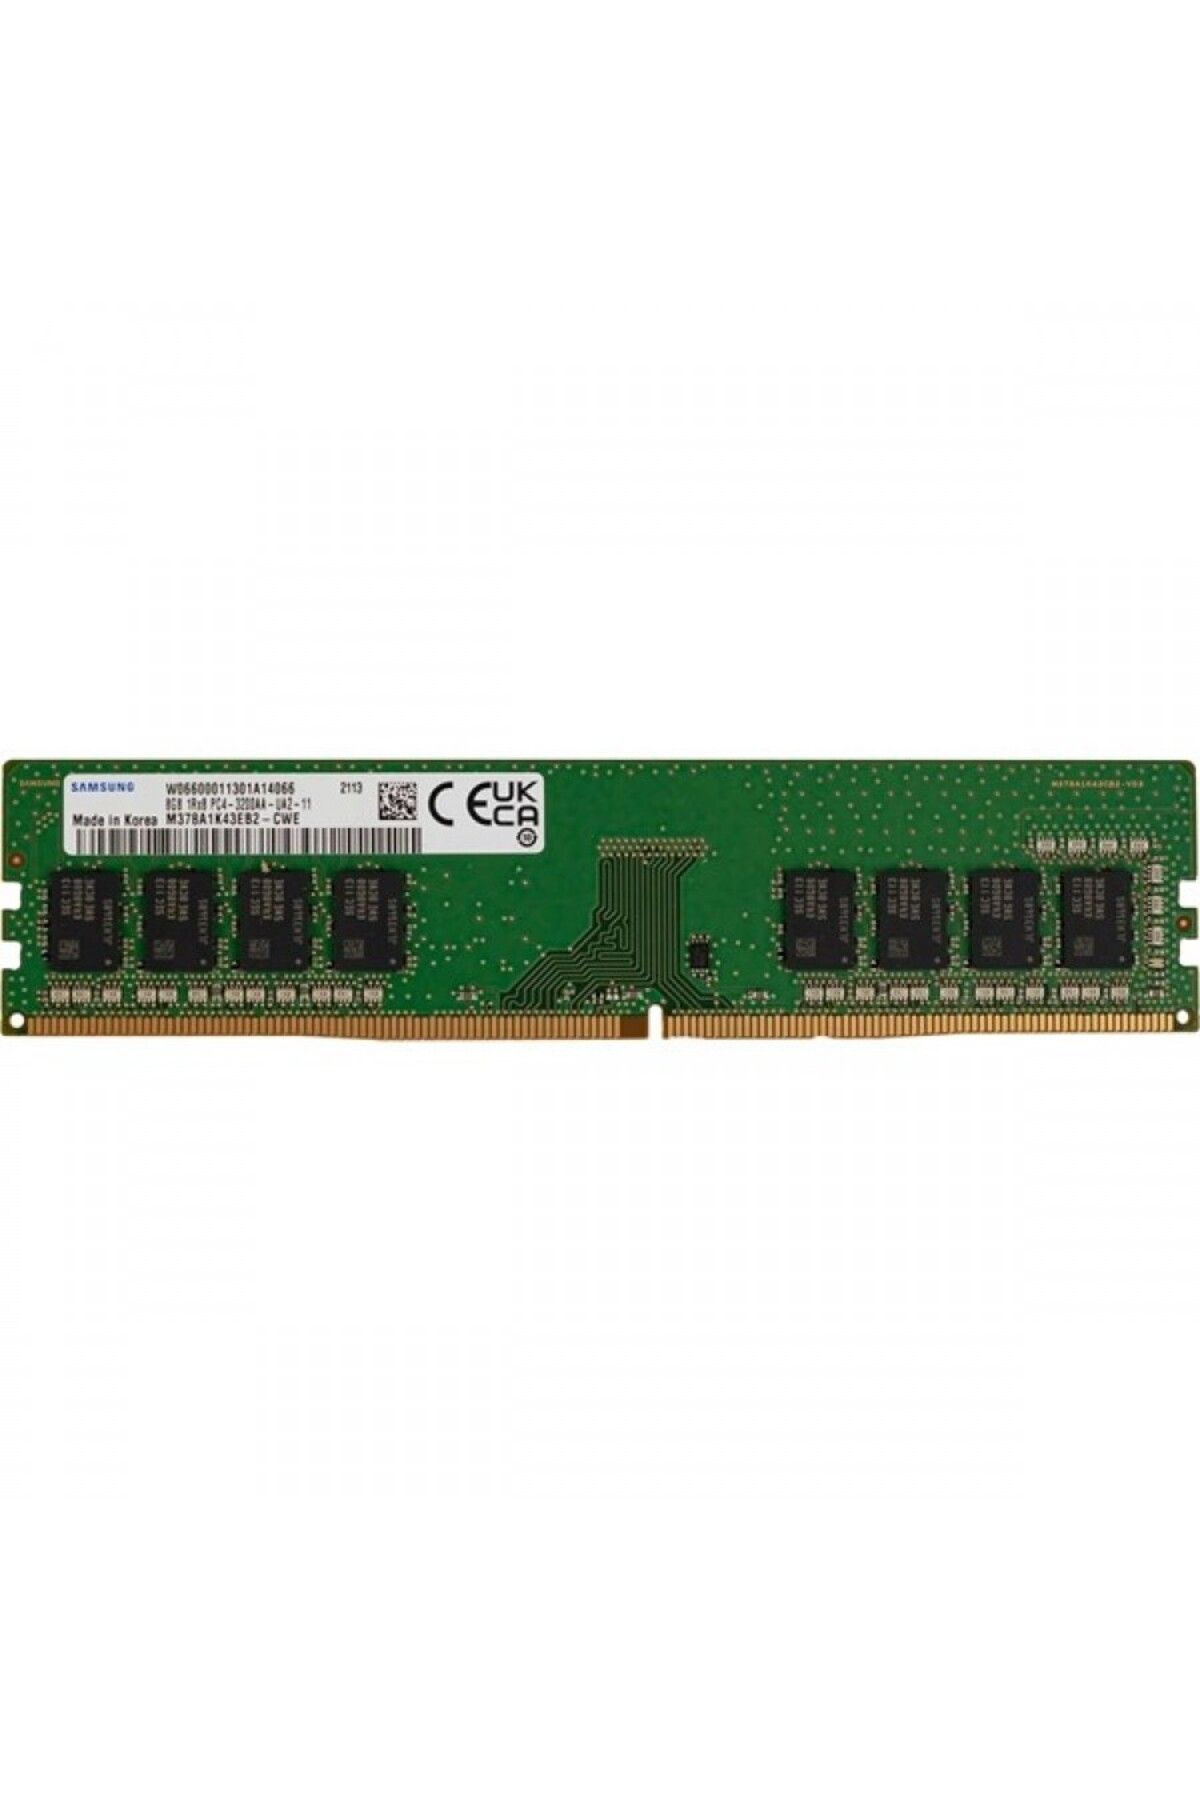 Samsung 8GB DDR4 3200MHZ CL22 PC RAM VALUE M378A1K43EB2-CWE